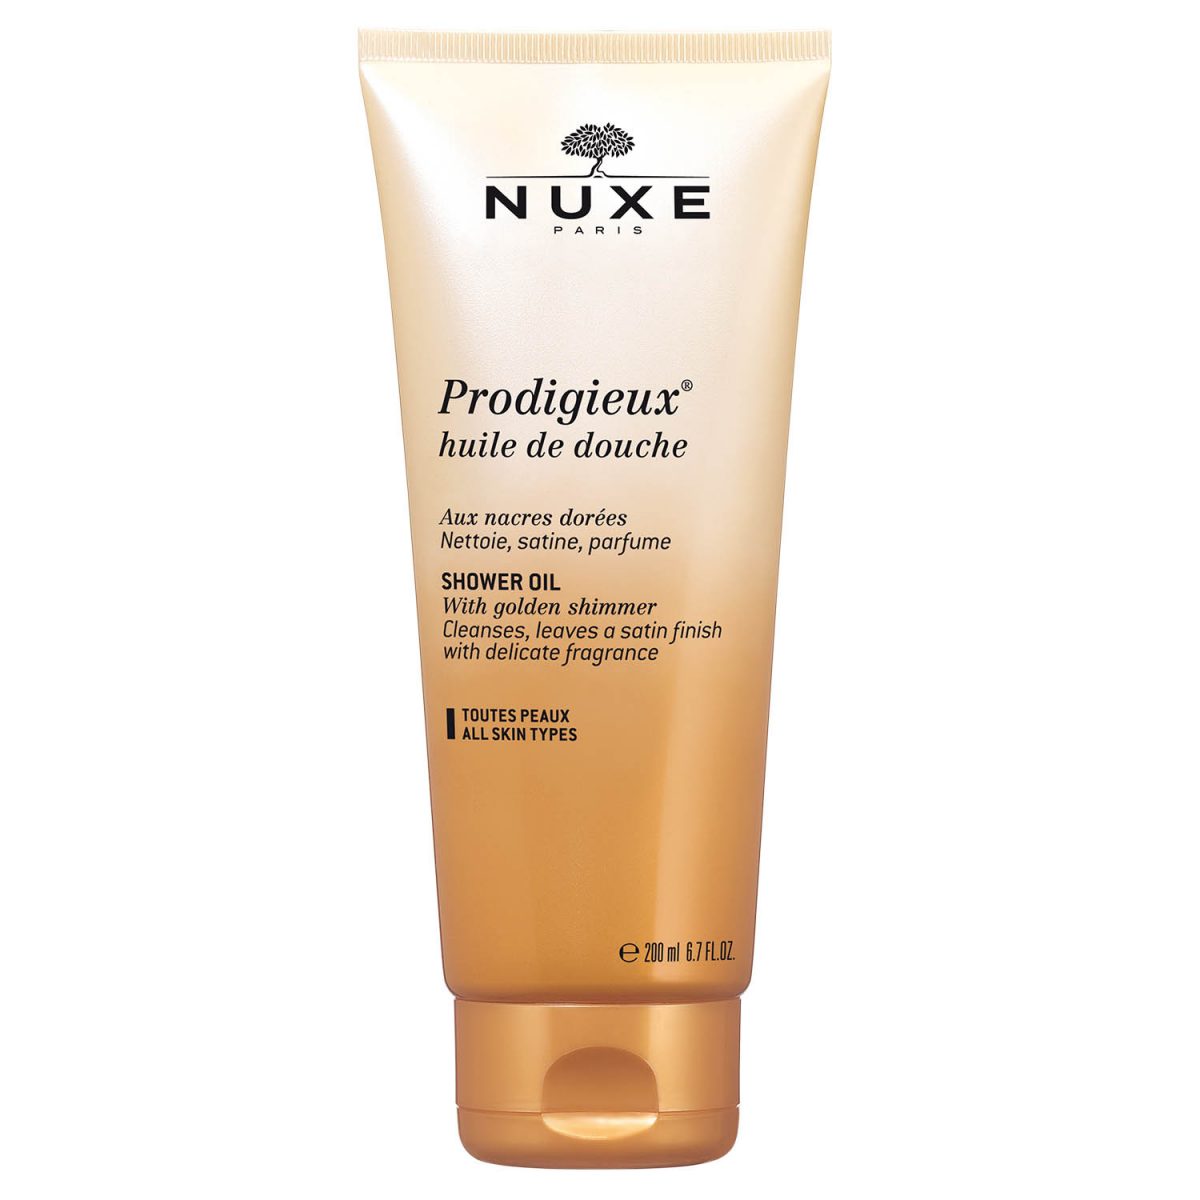 Nuxe Prodigieux shower oil 200 ml